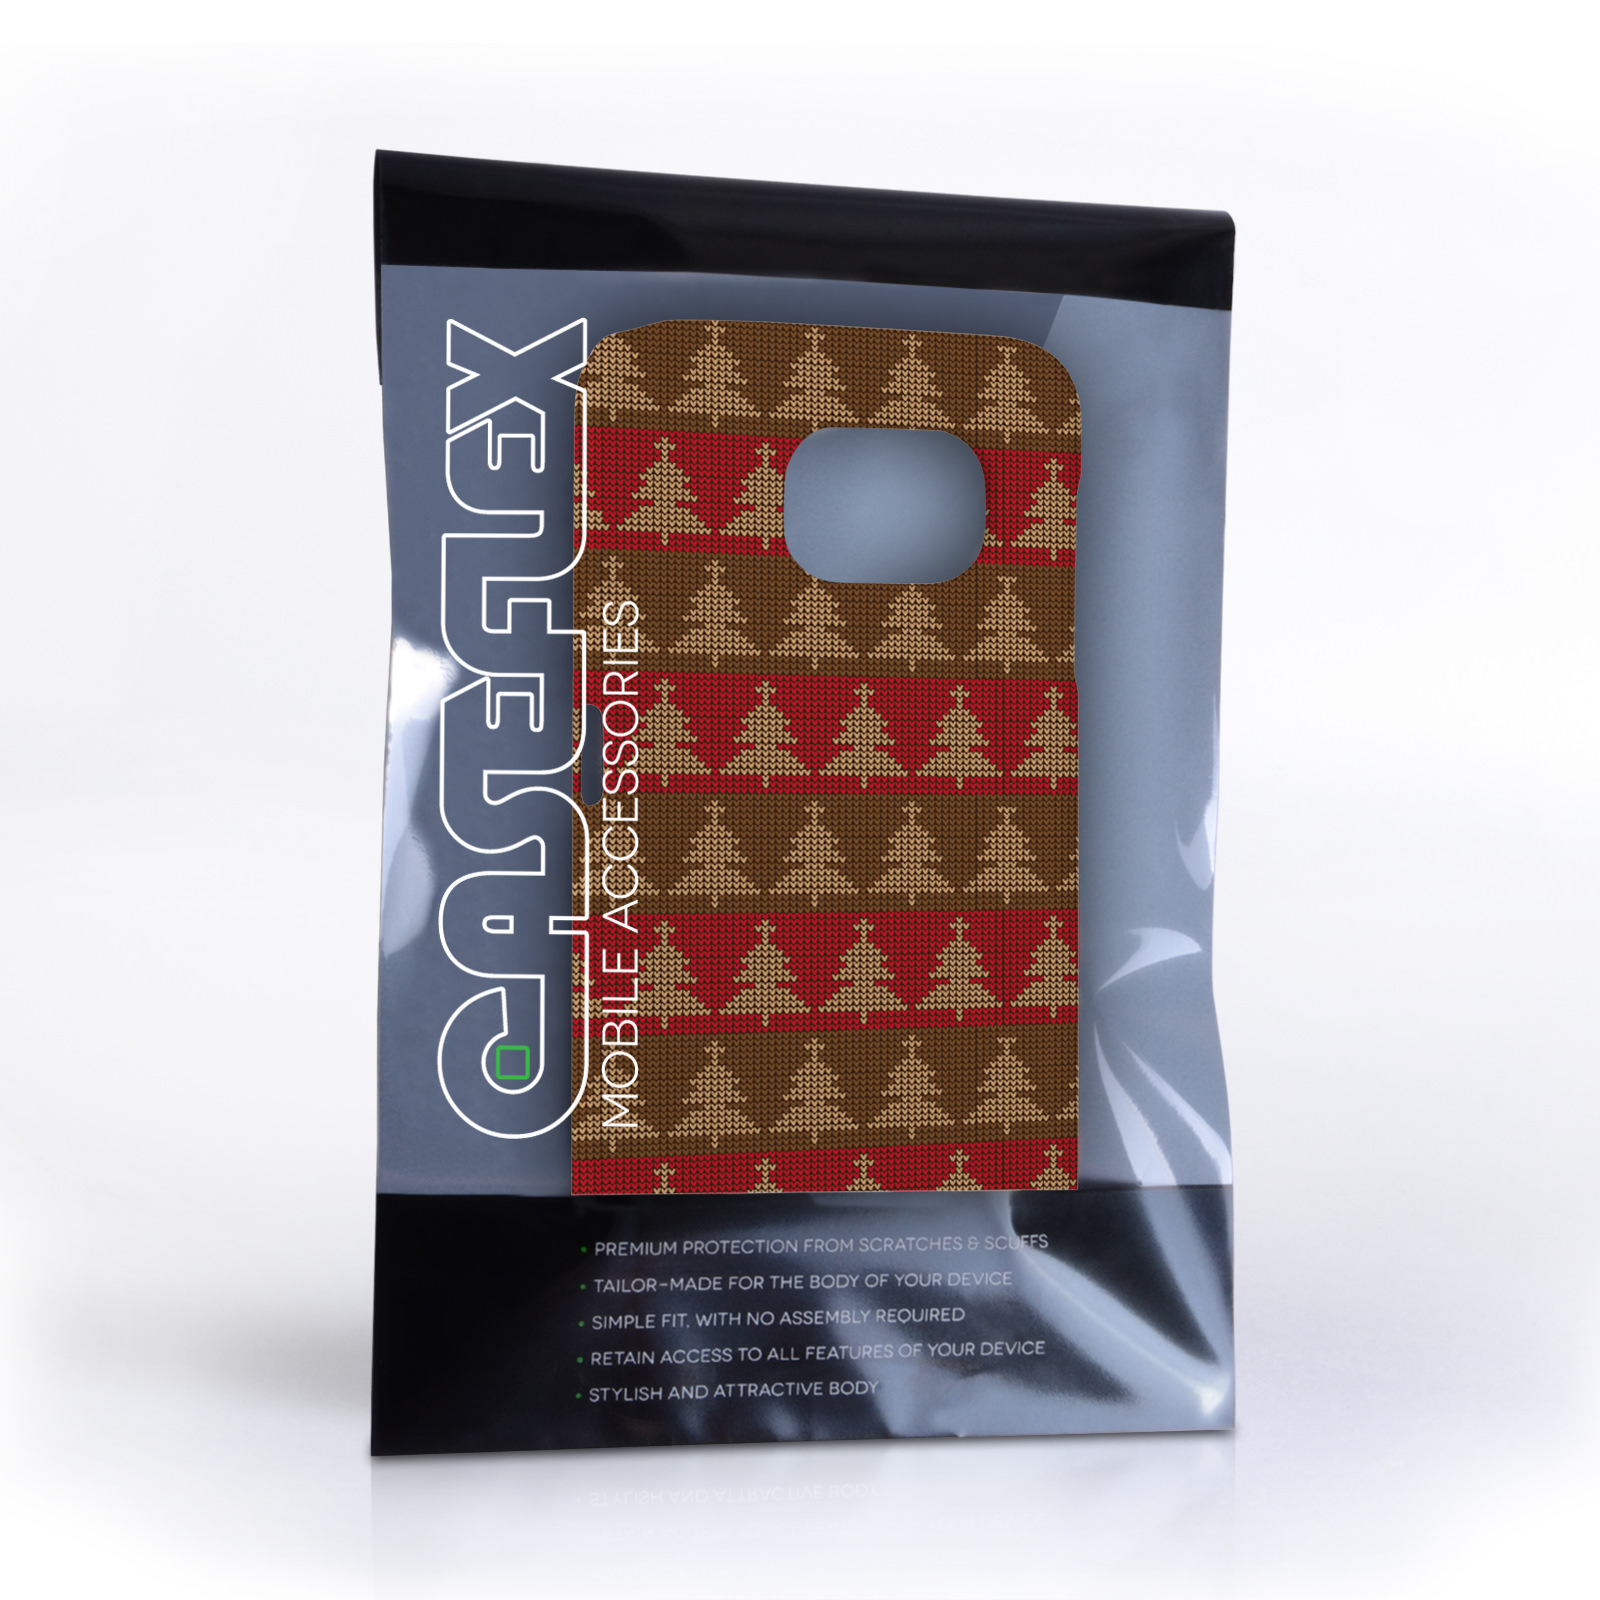 Caseflex Samsung Galaxy S6 Christmas Tree Knit Jumper Hard Case - Brown / Red